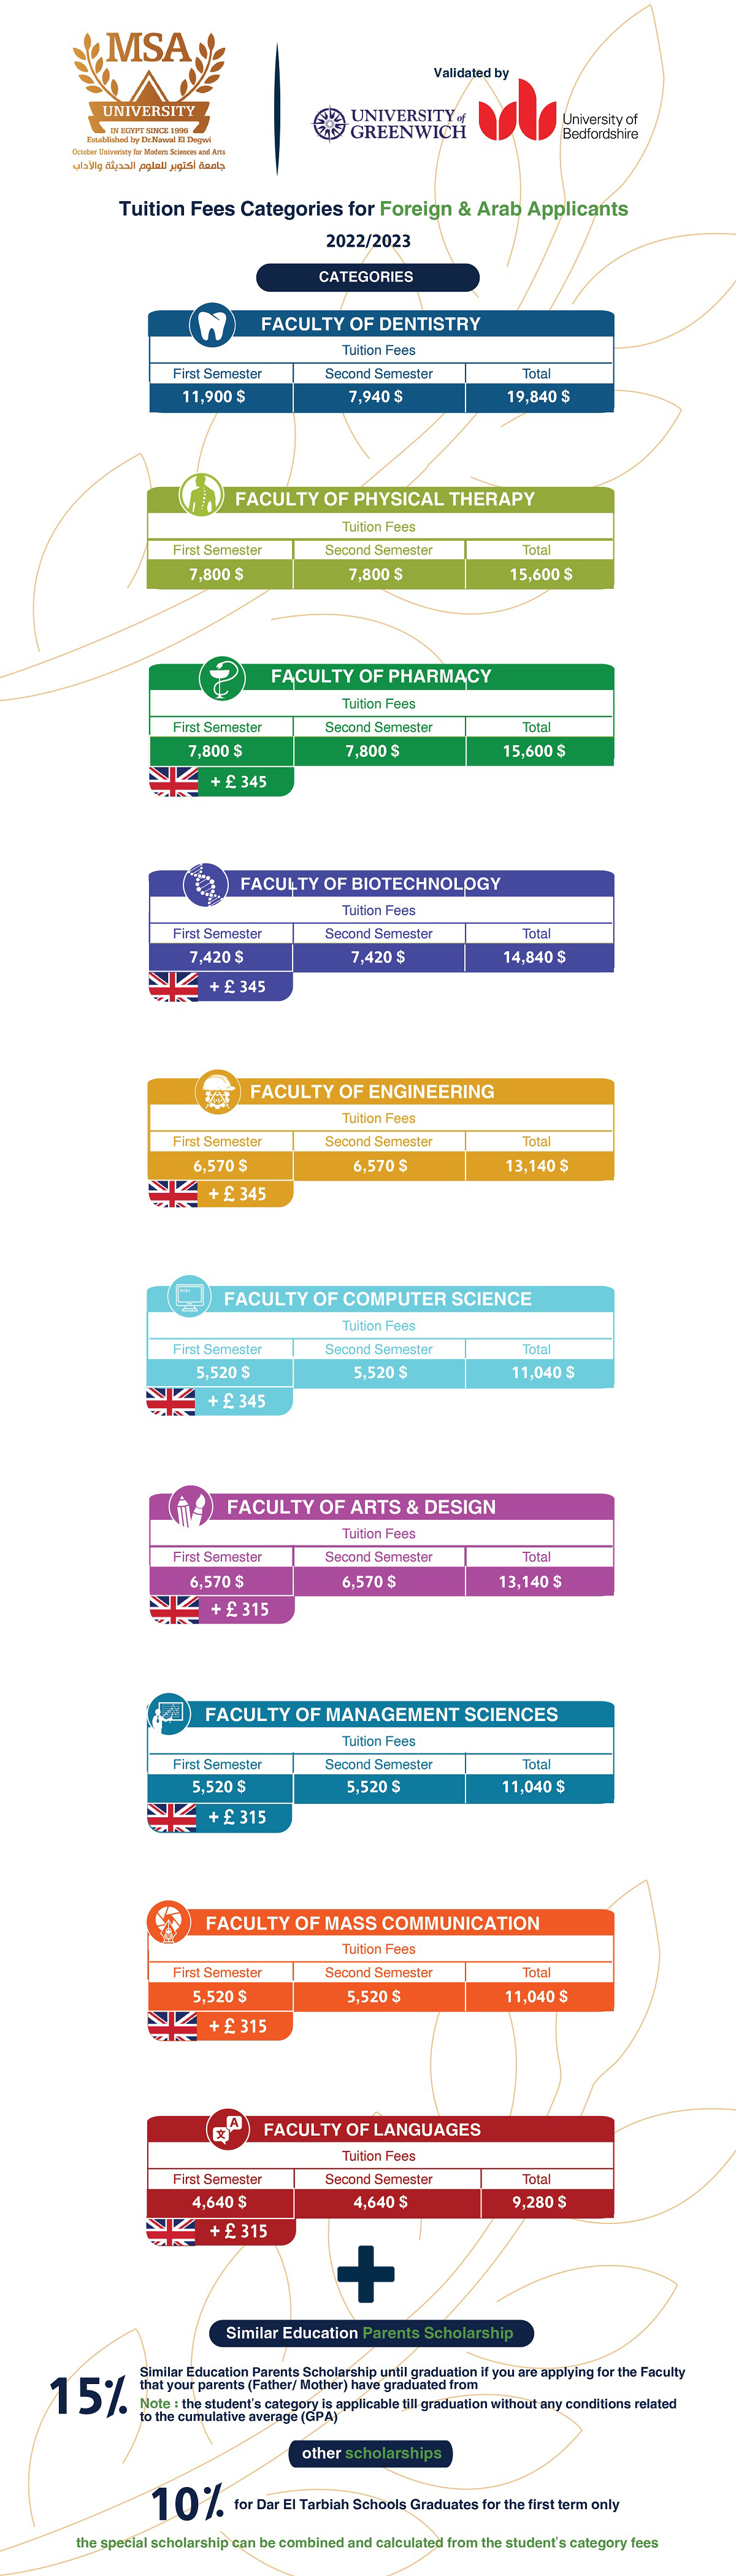 MSA University - Tuition Fees 2022 - 2023 for International Students (Non-Egyptian)